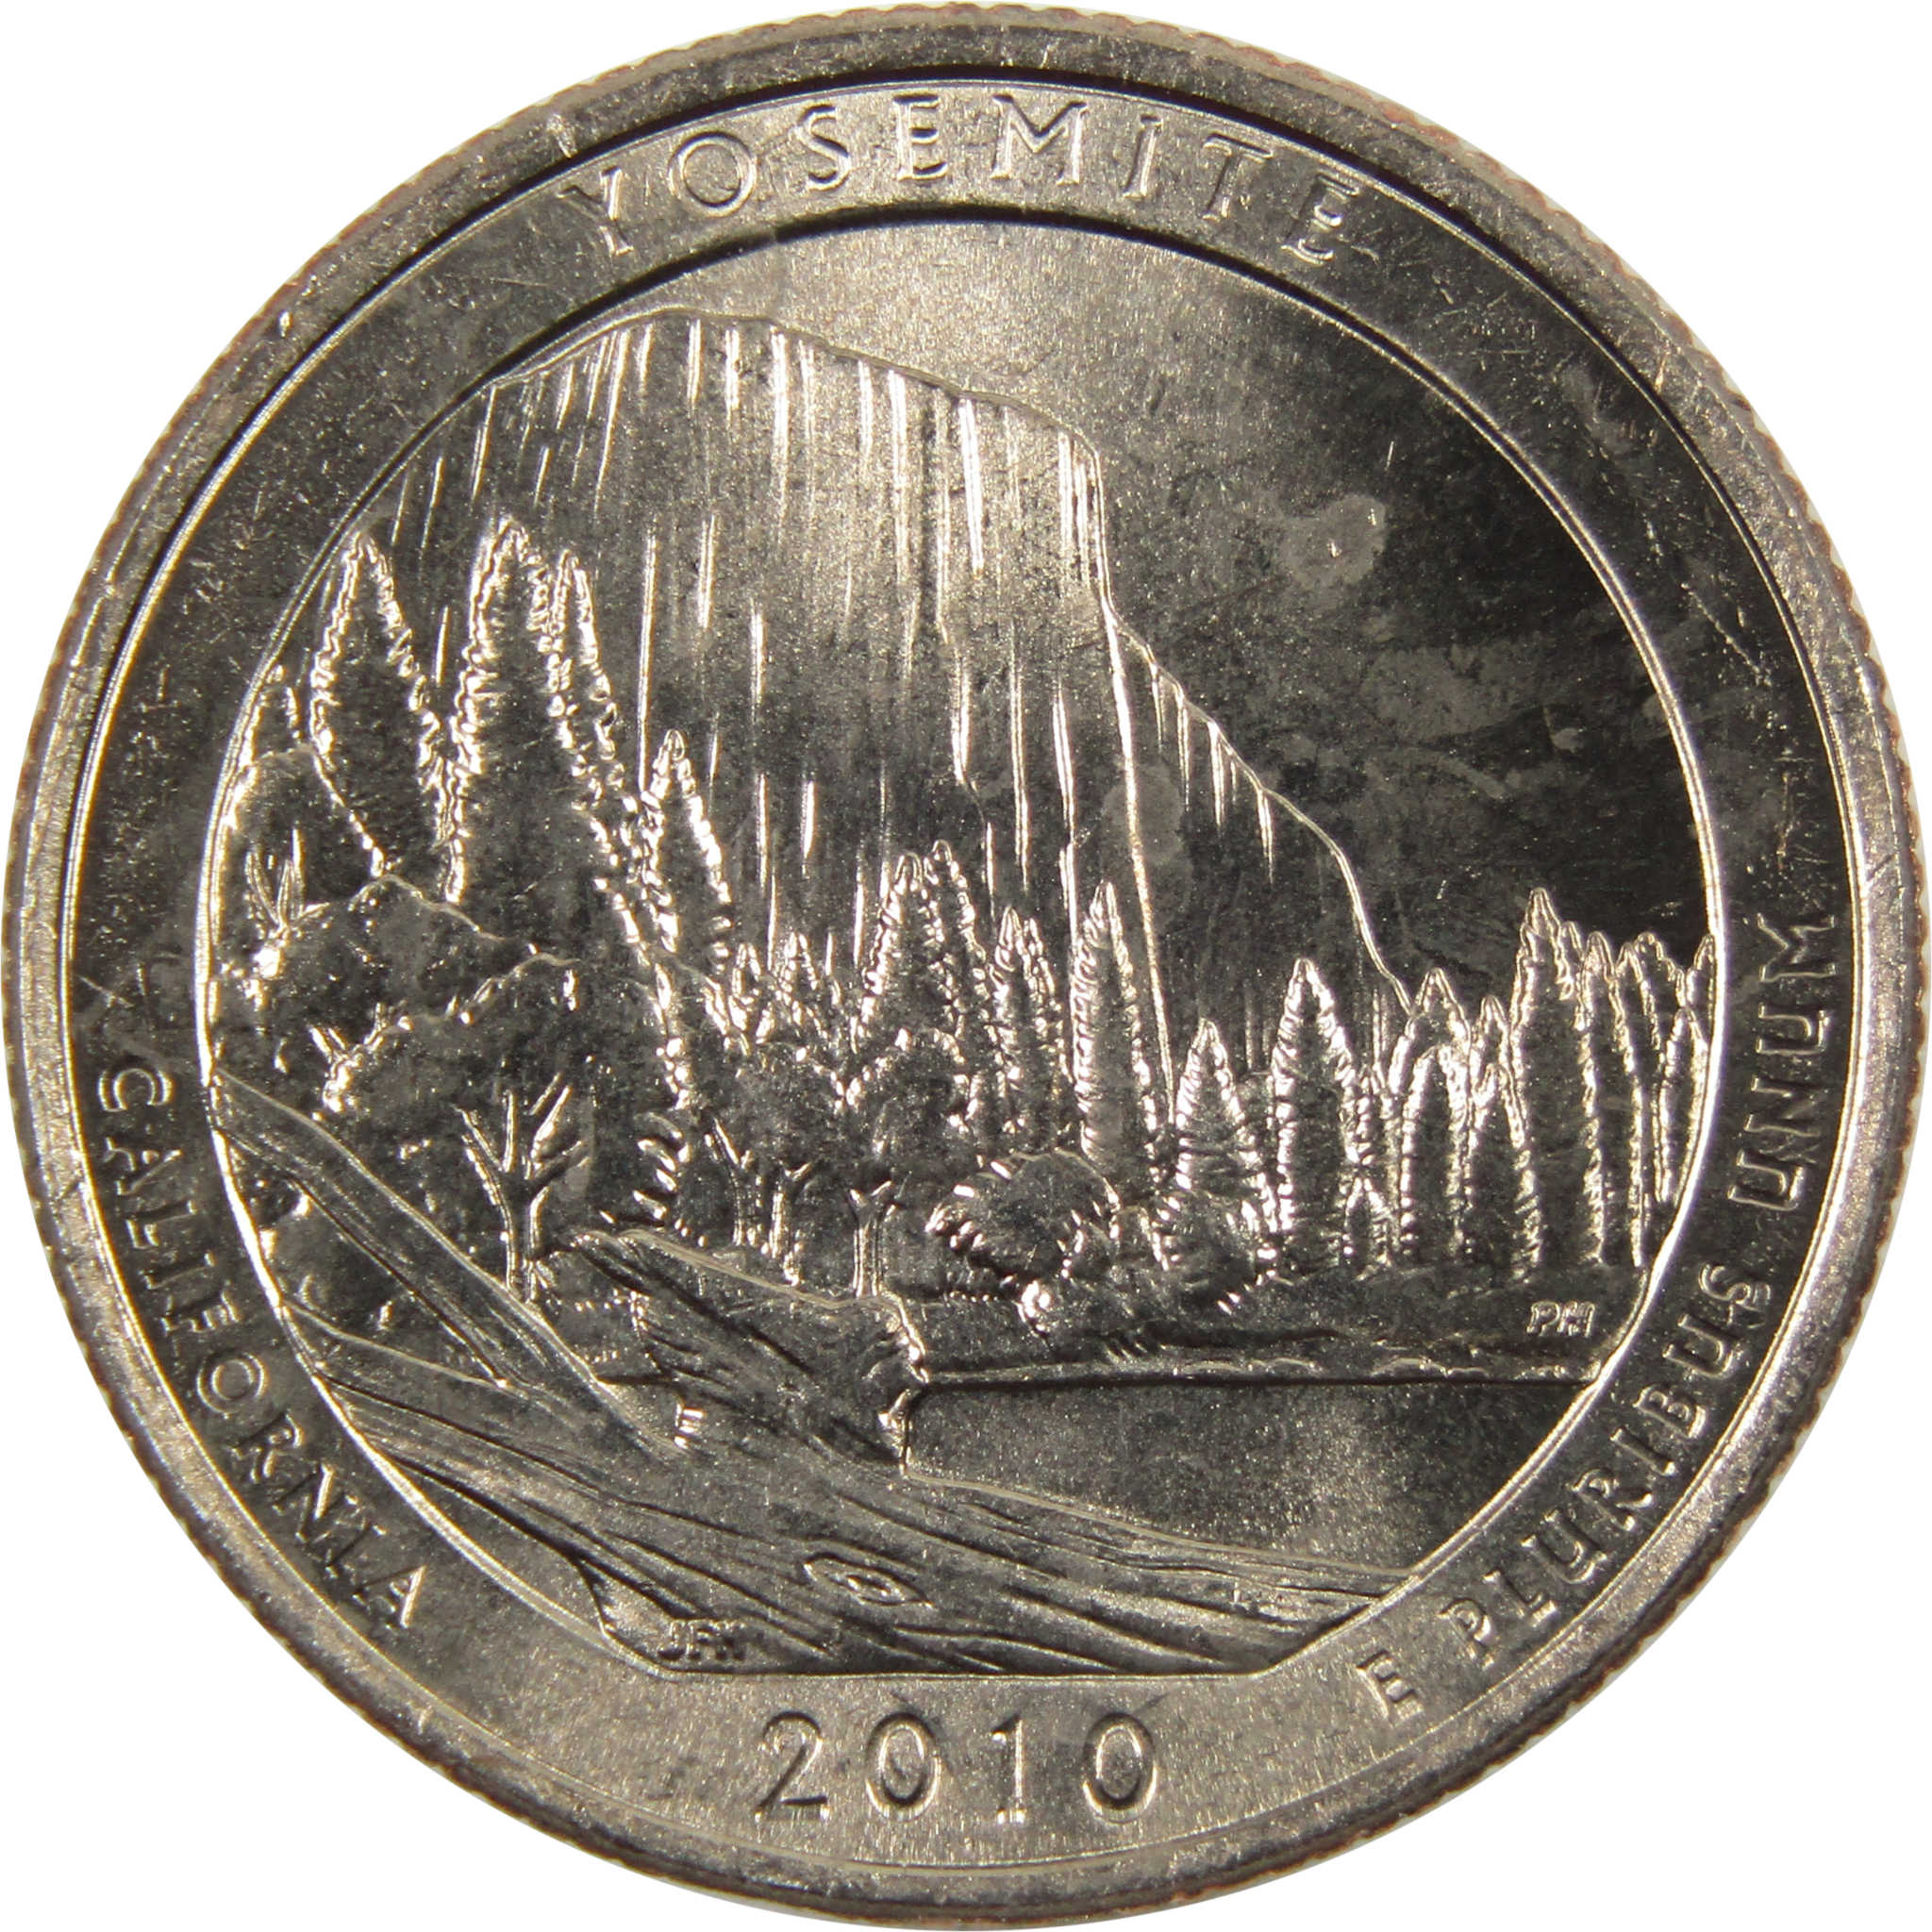 2010 P Yosemite National Park Quarter BU Uncirculated Clad 25c Coin